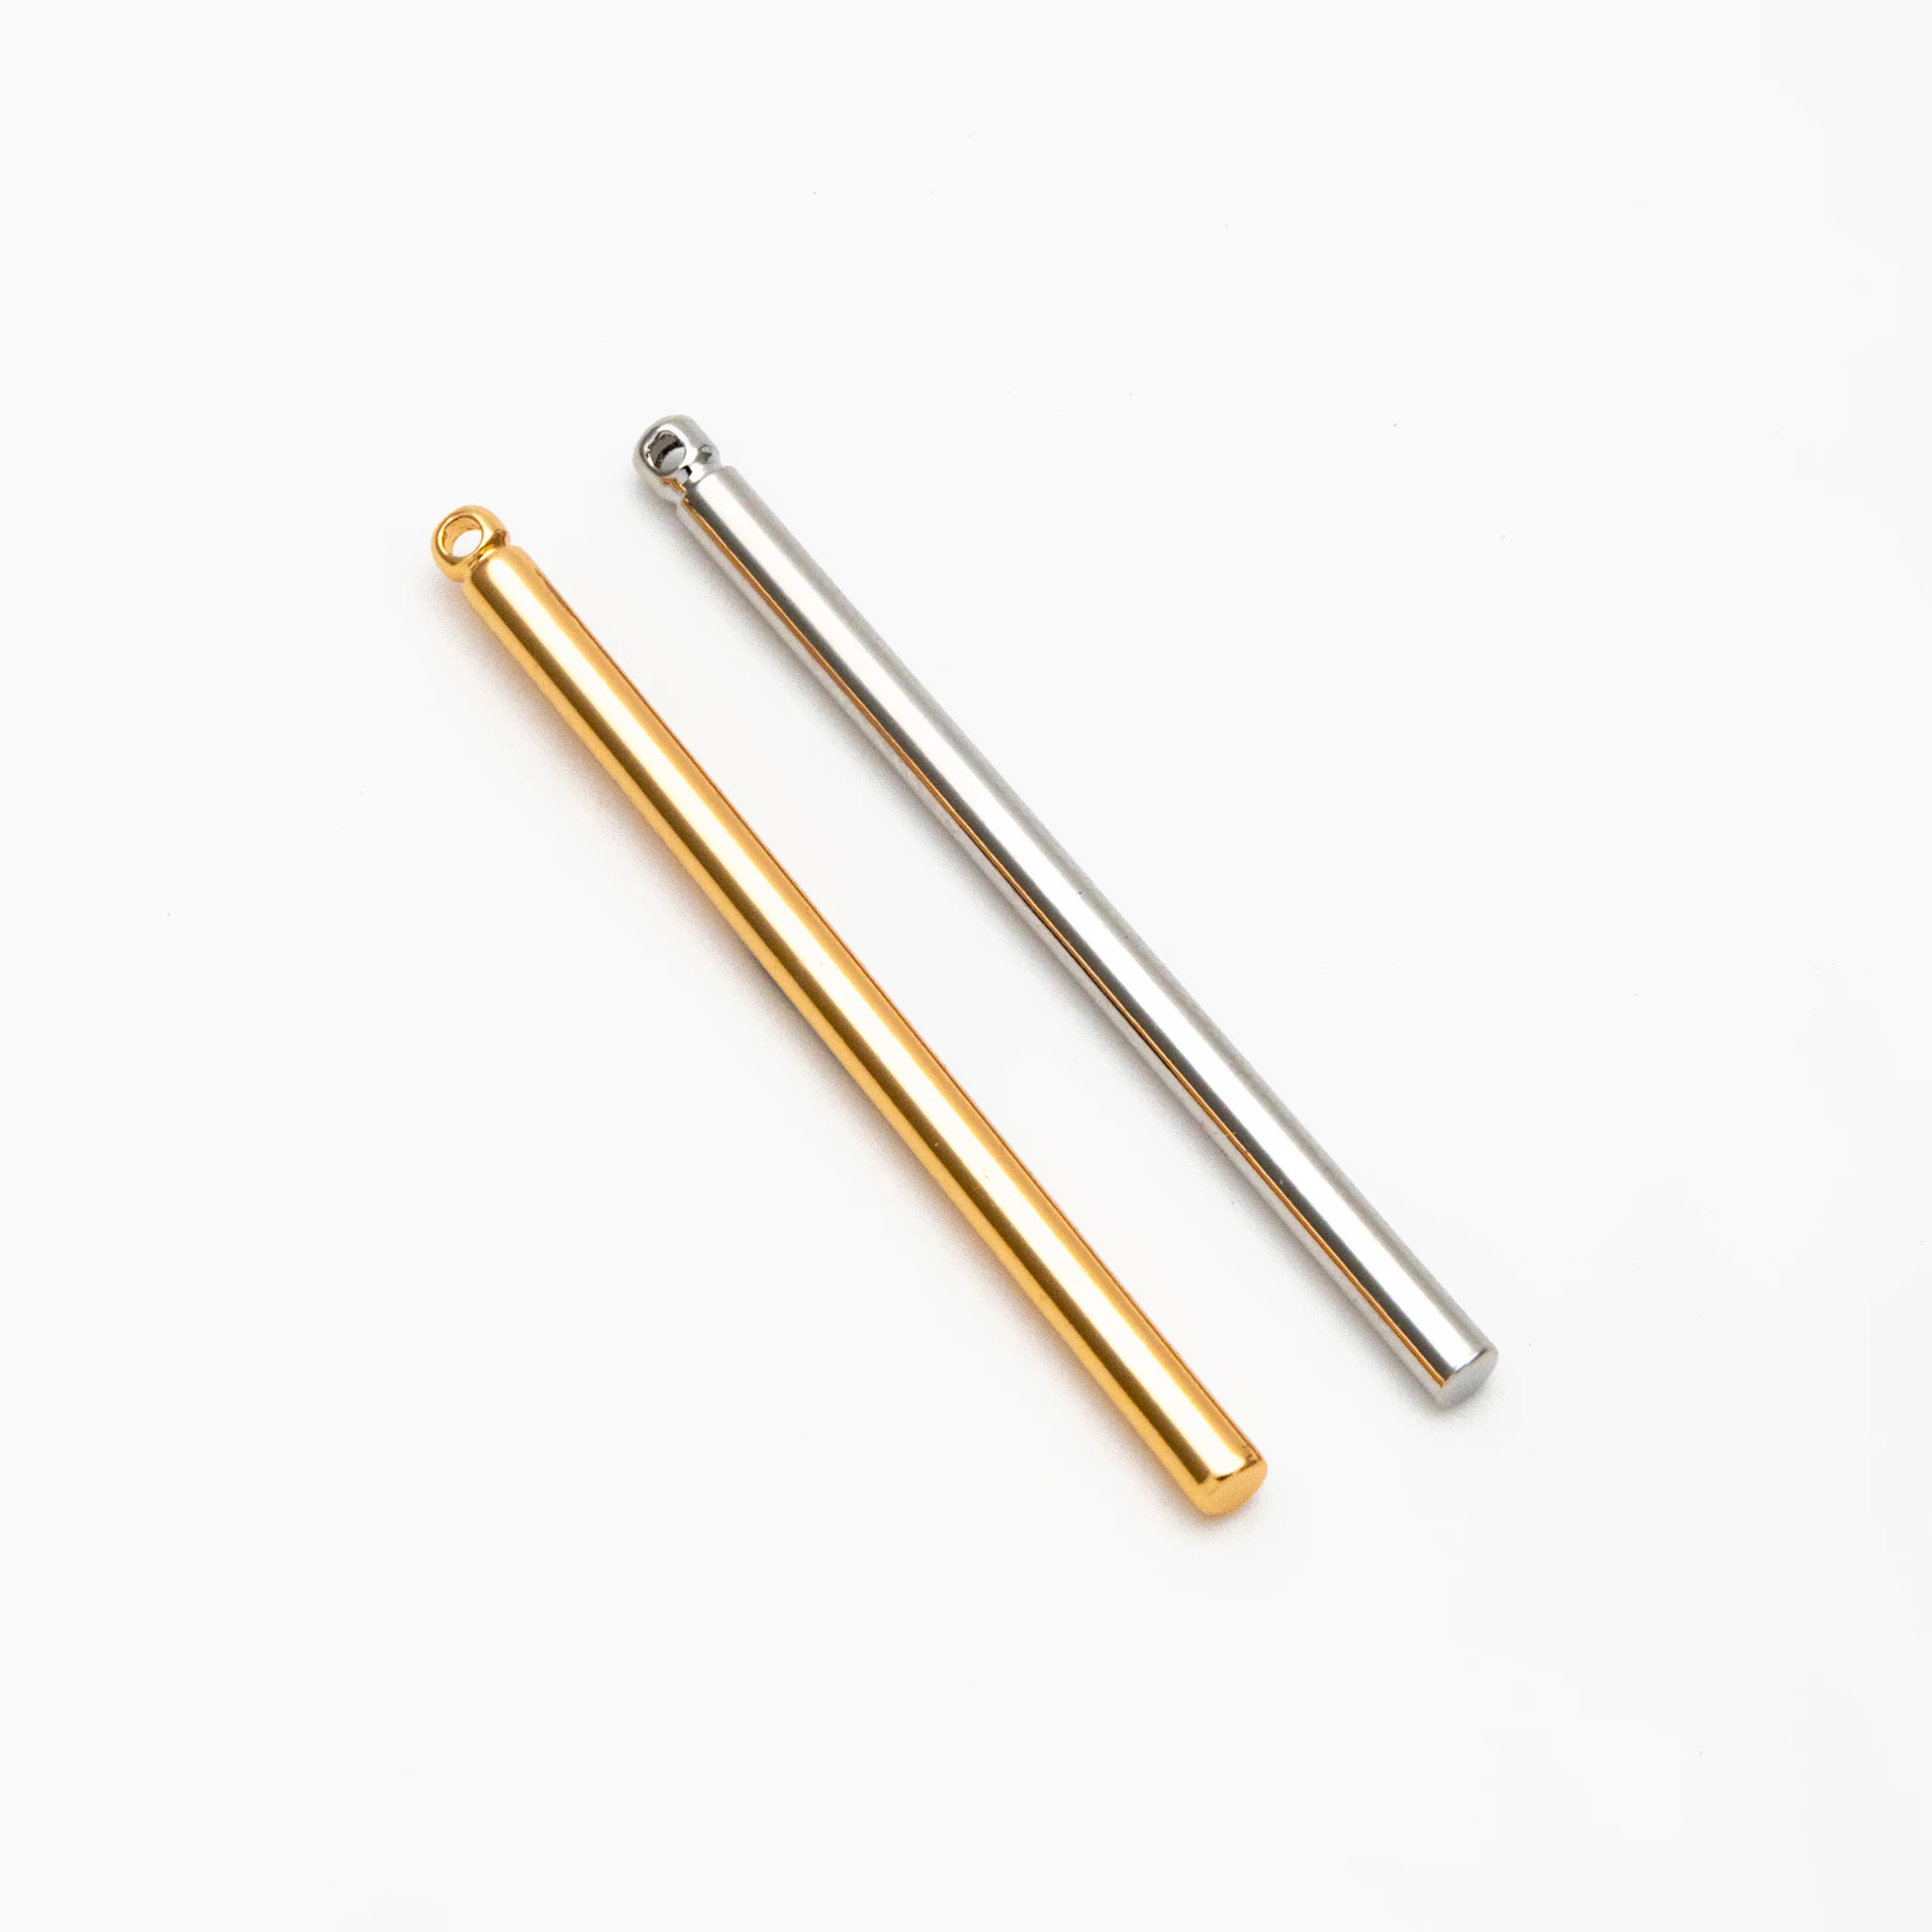 

10pcs Gold/ Silver tone Long Tube Charms 35mm, Gold/ Rhodium Plated Brass Stick Bar Pendants, Lead Nickel Free (GB-080)